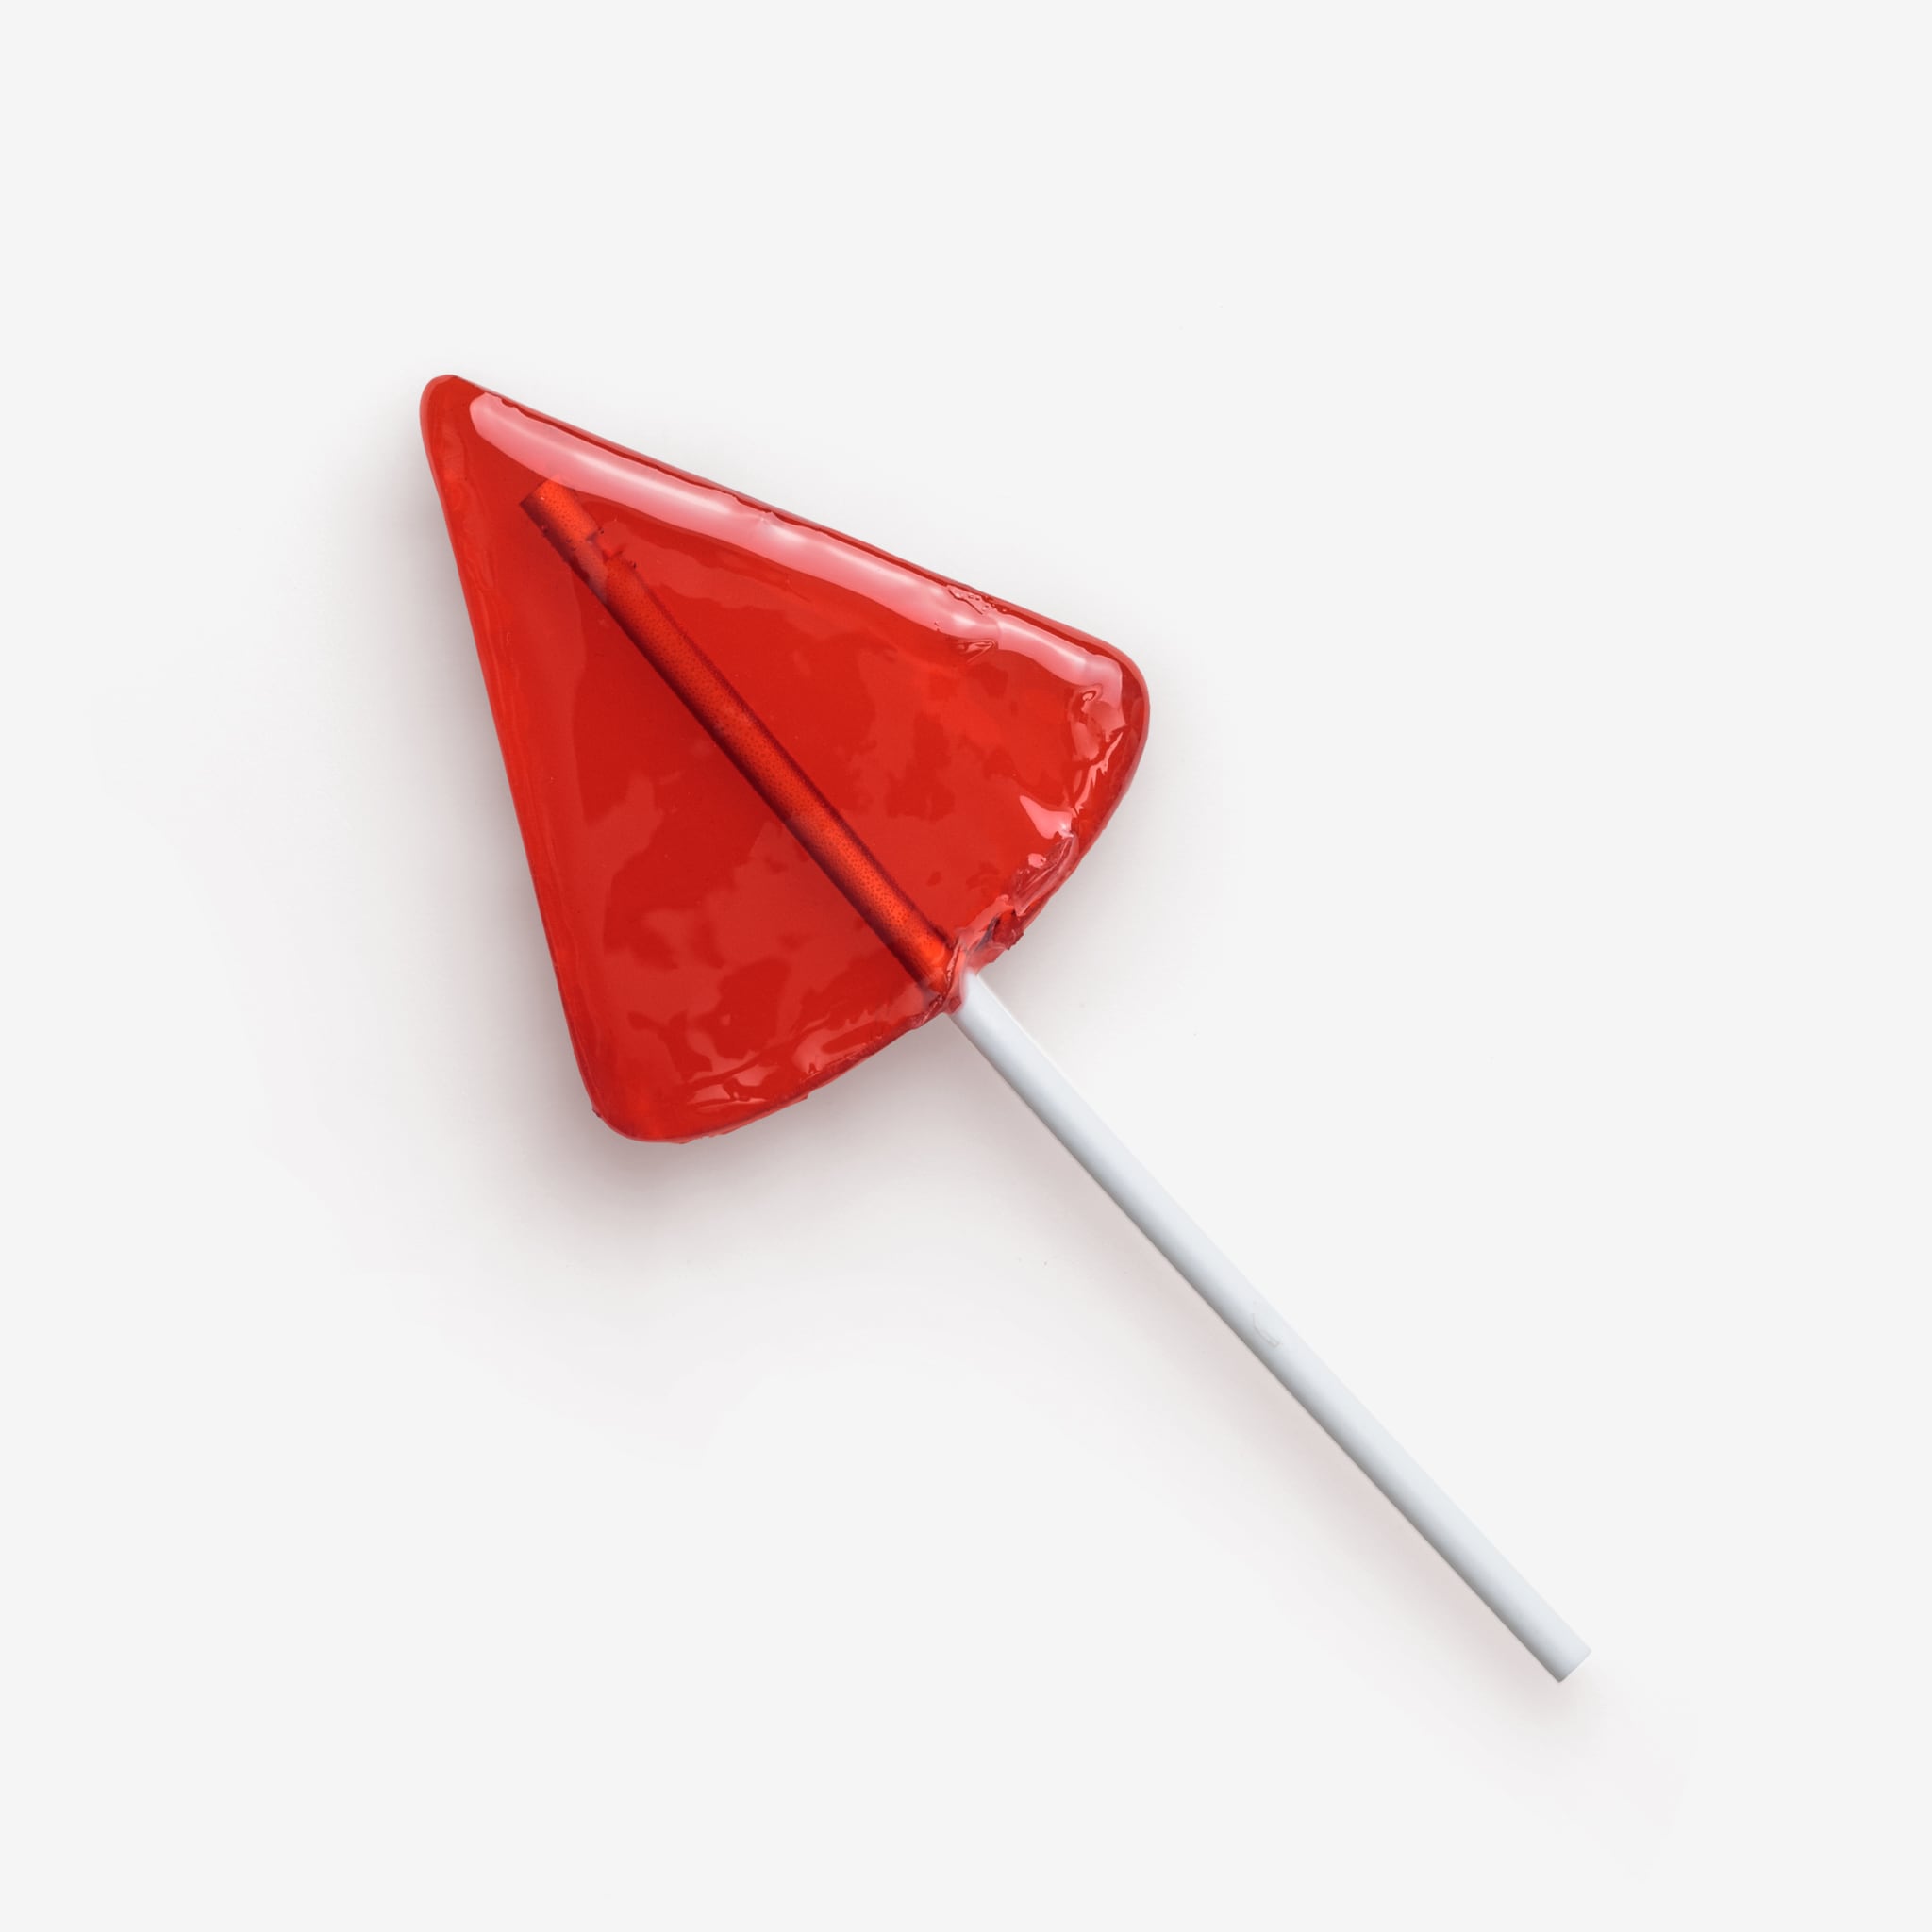 Lollipop PSD layered image